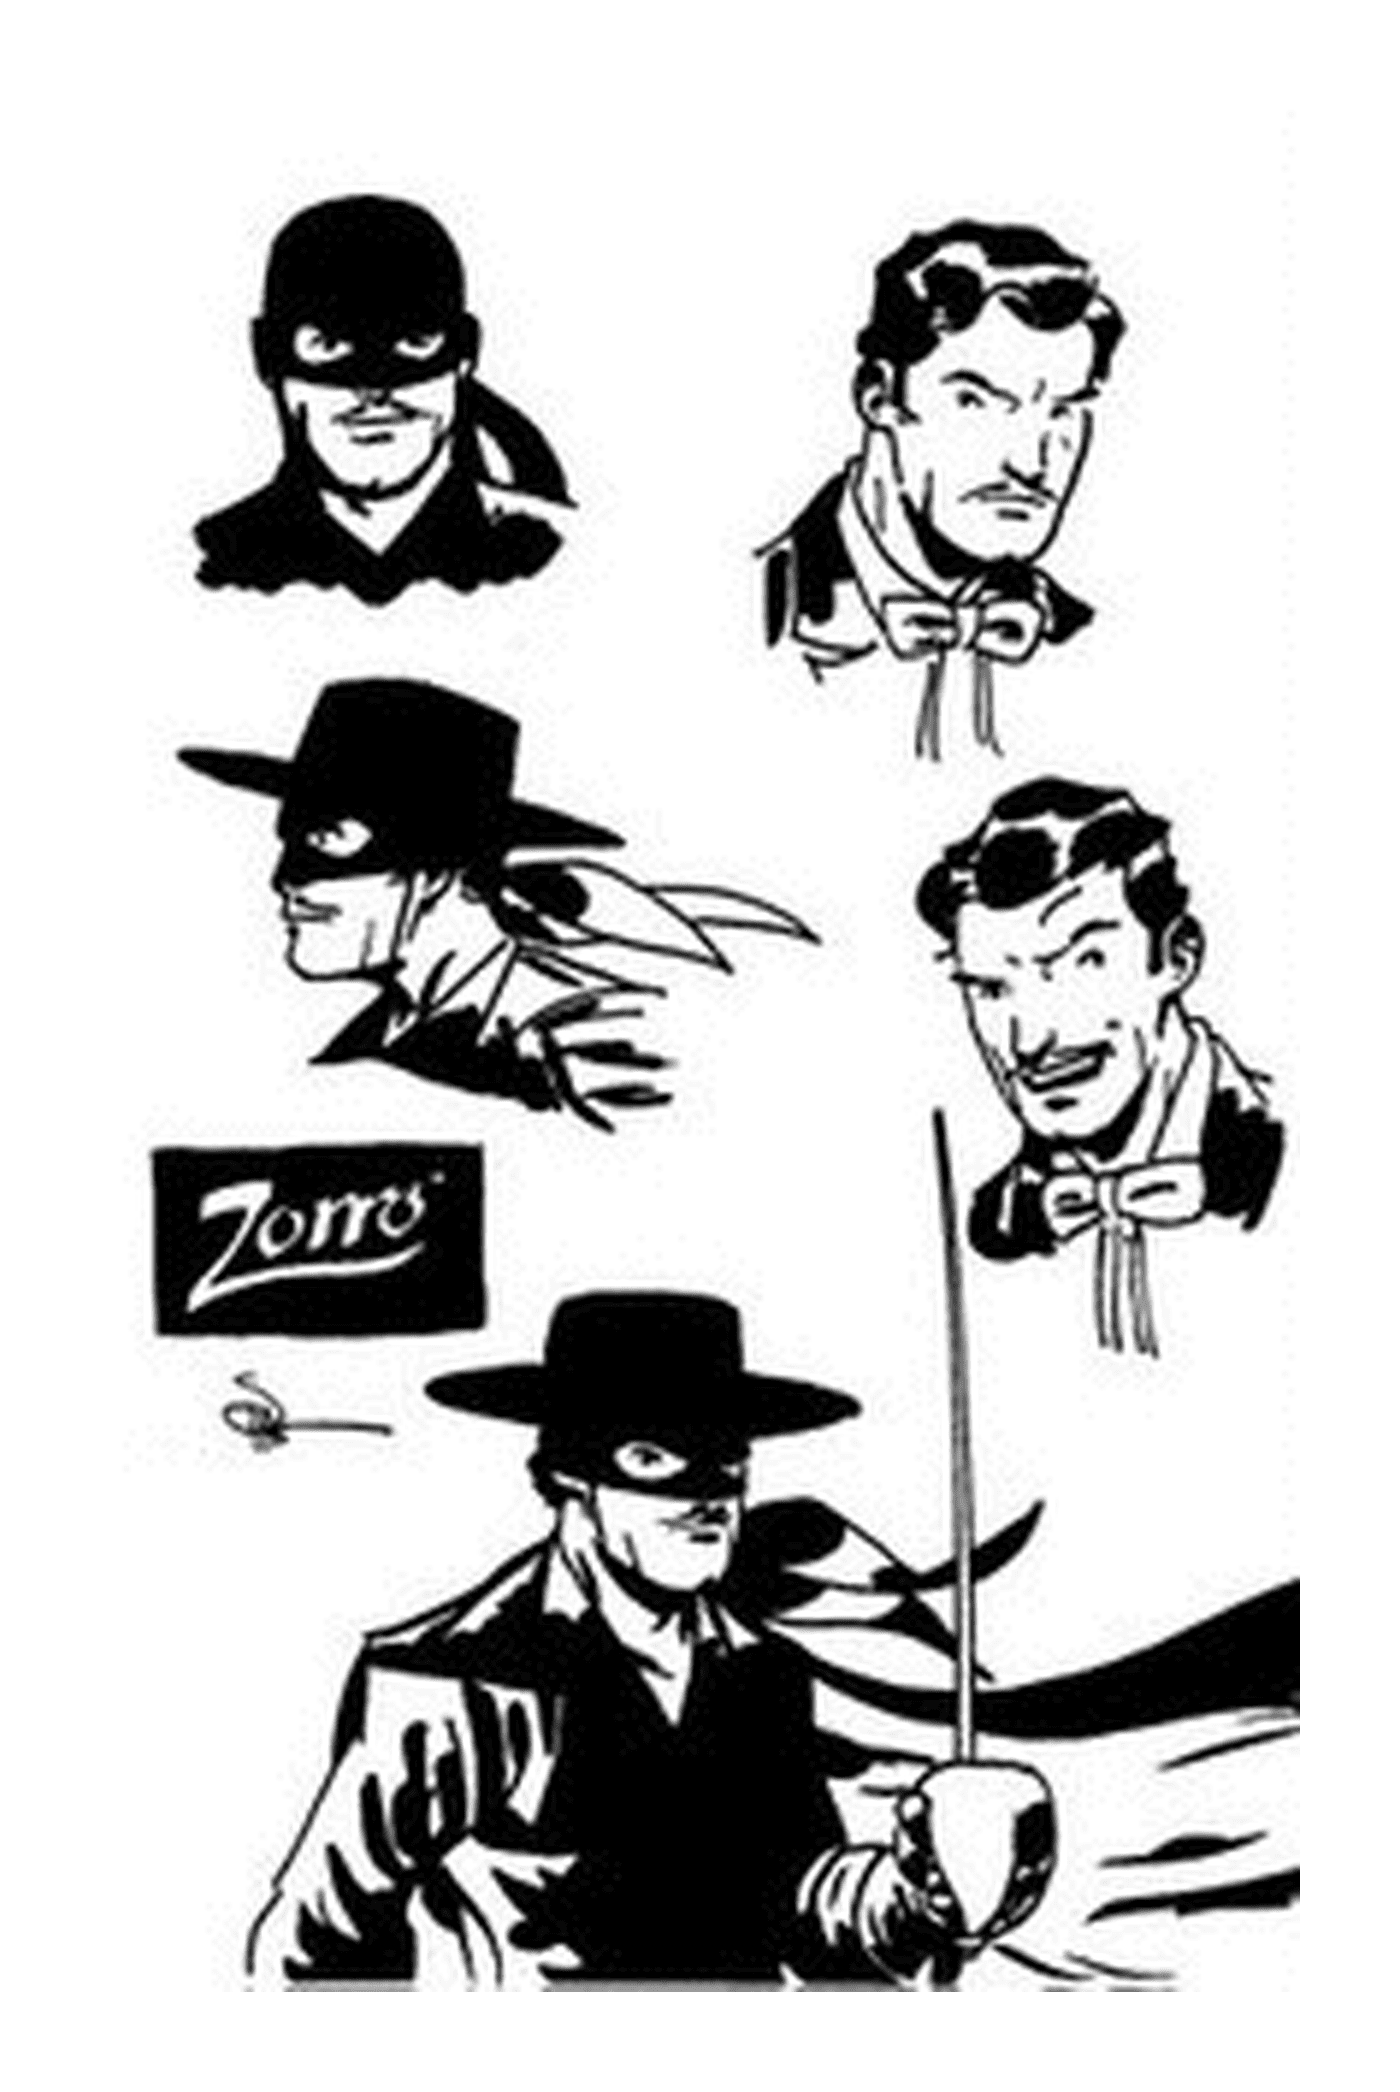  All the faces of Zorro 